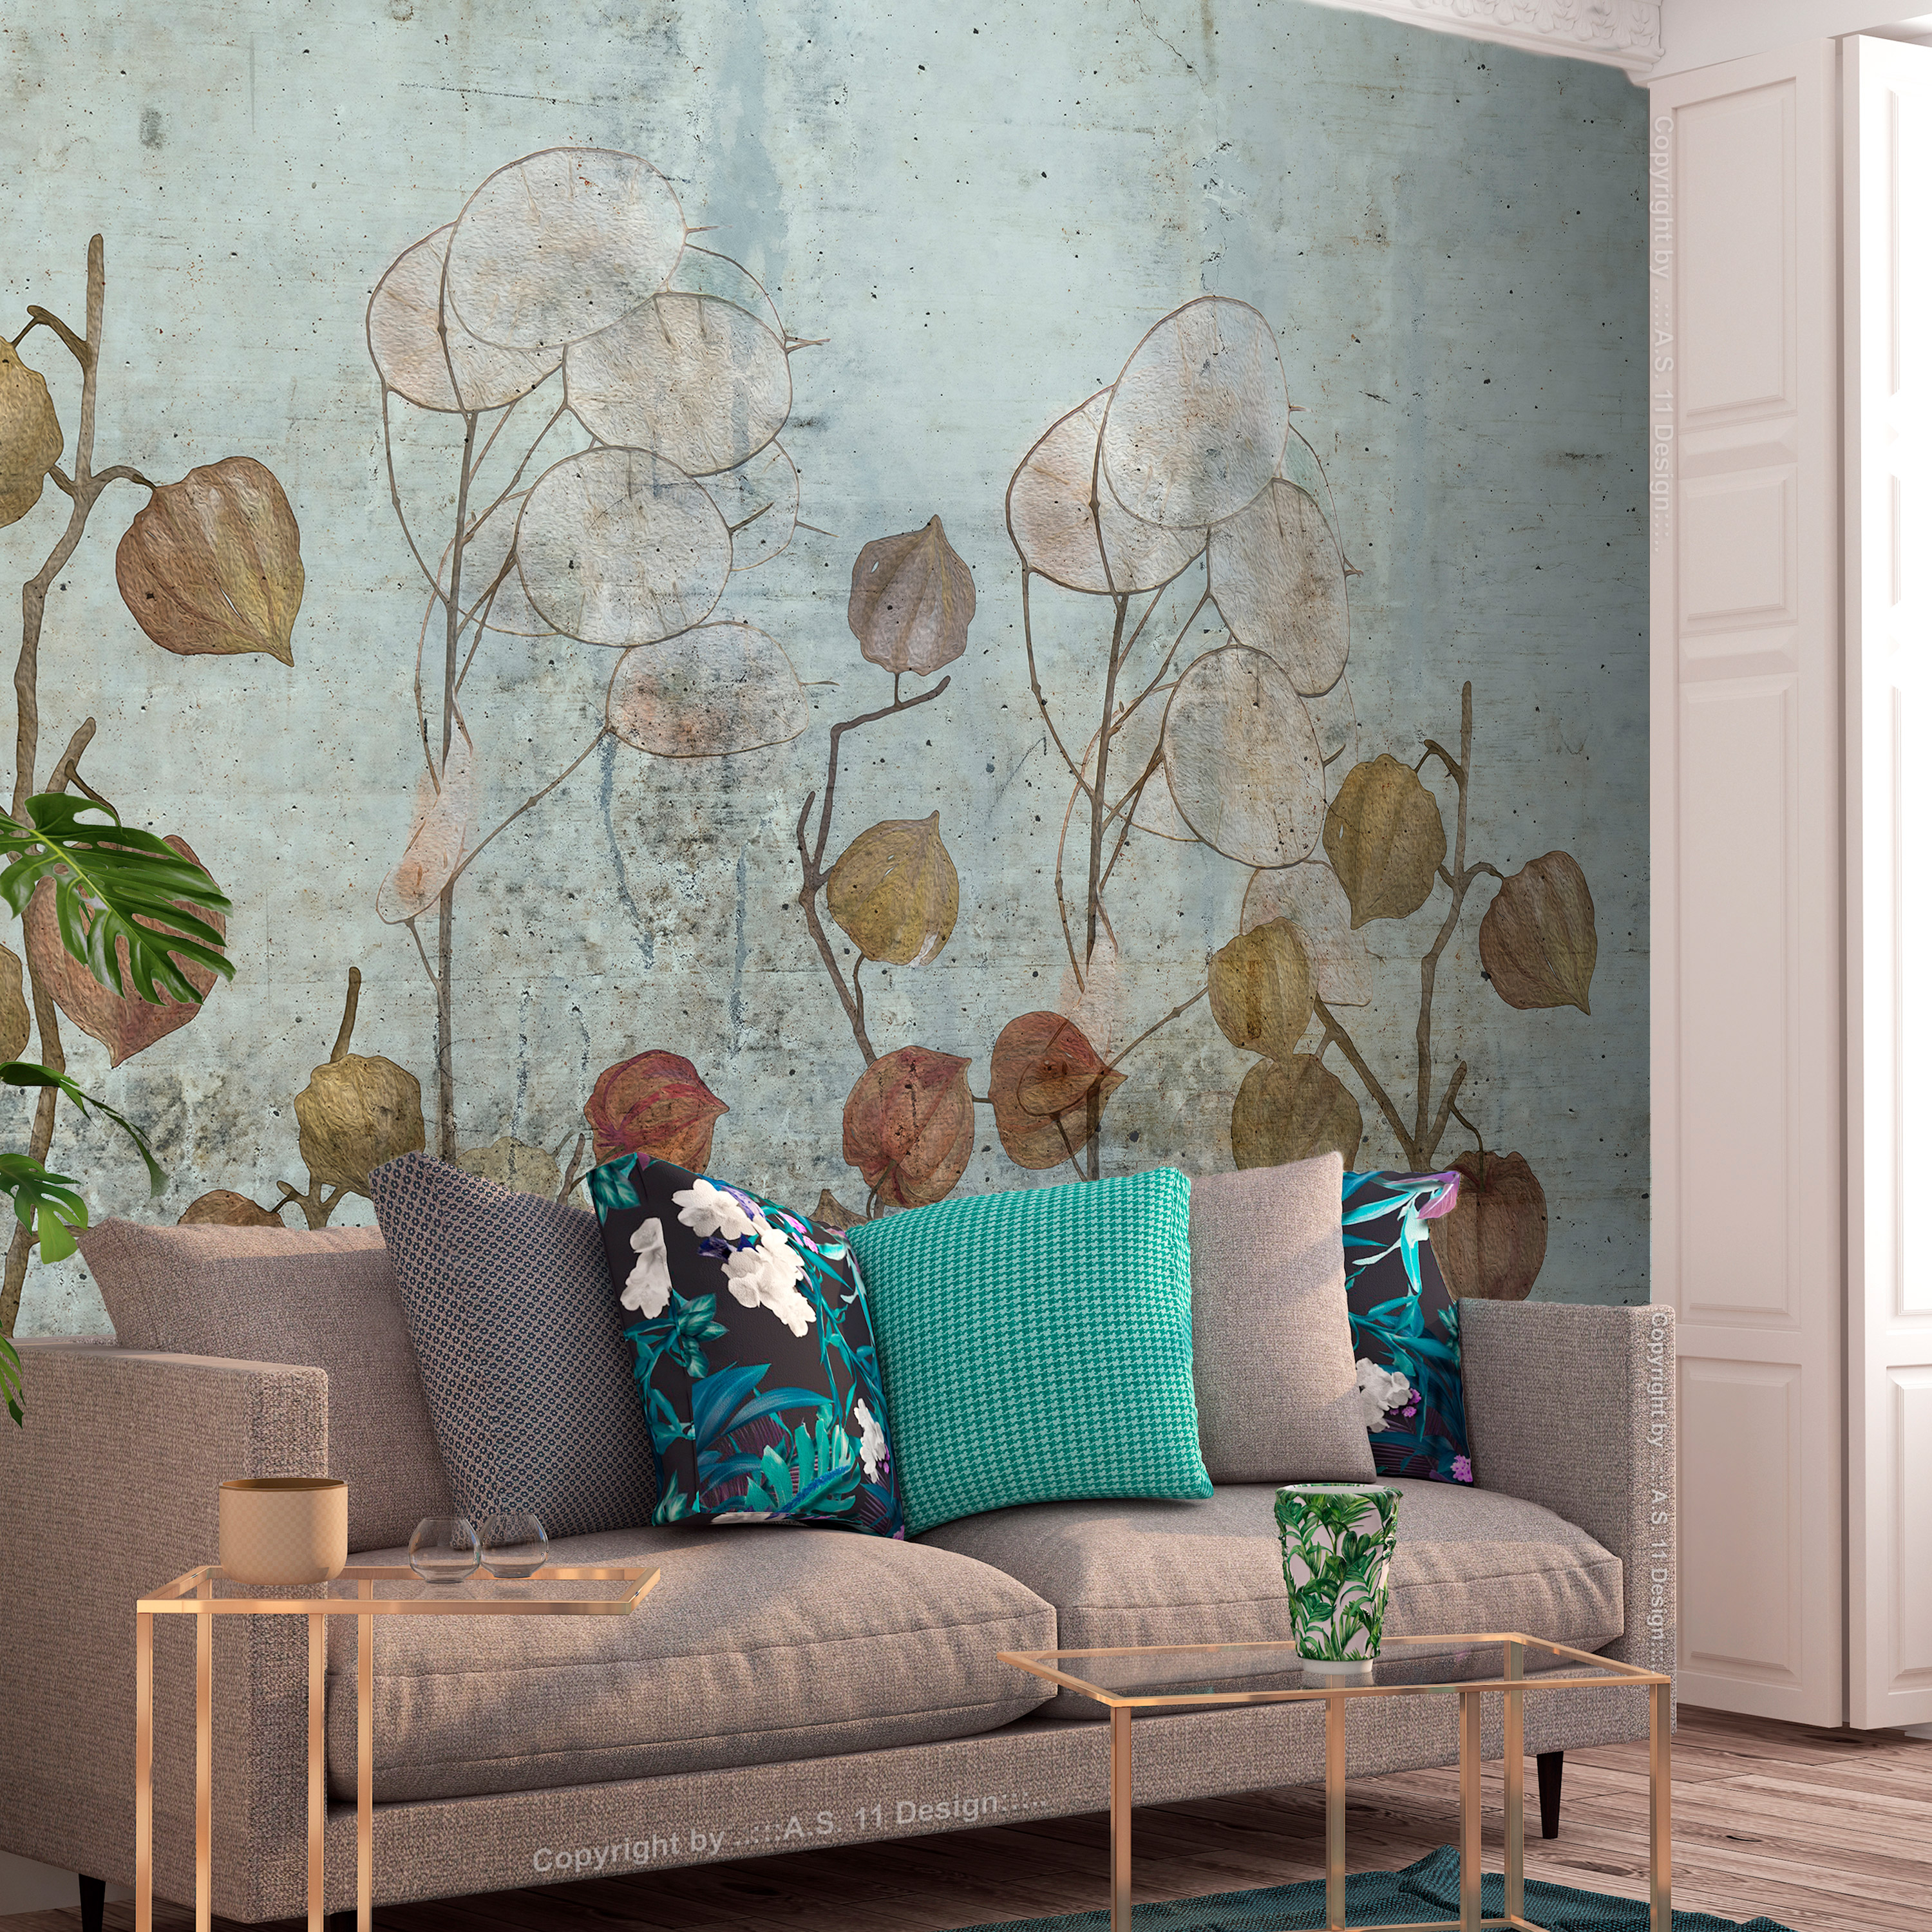 Self-adhesive Wallpaper - Painted Lunaria - 392x280